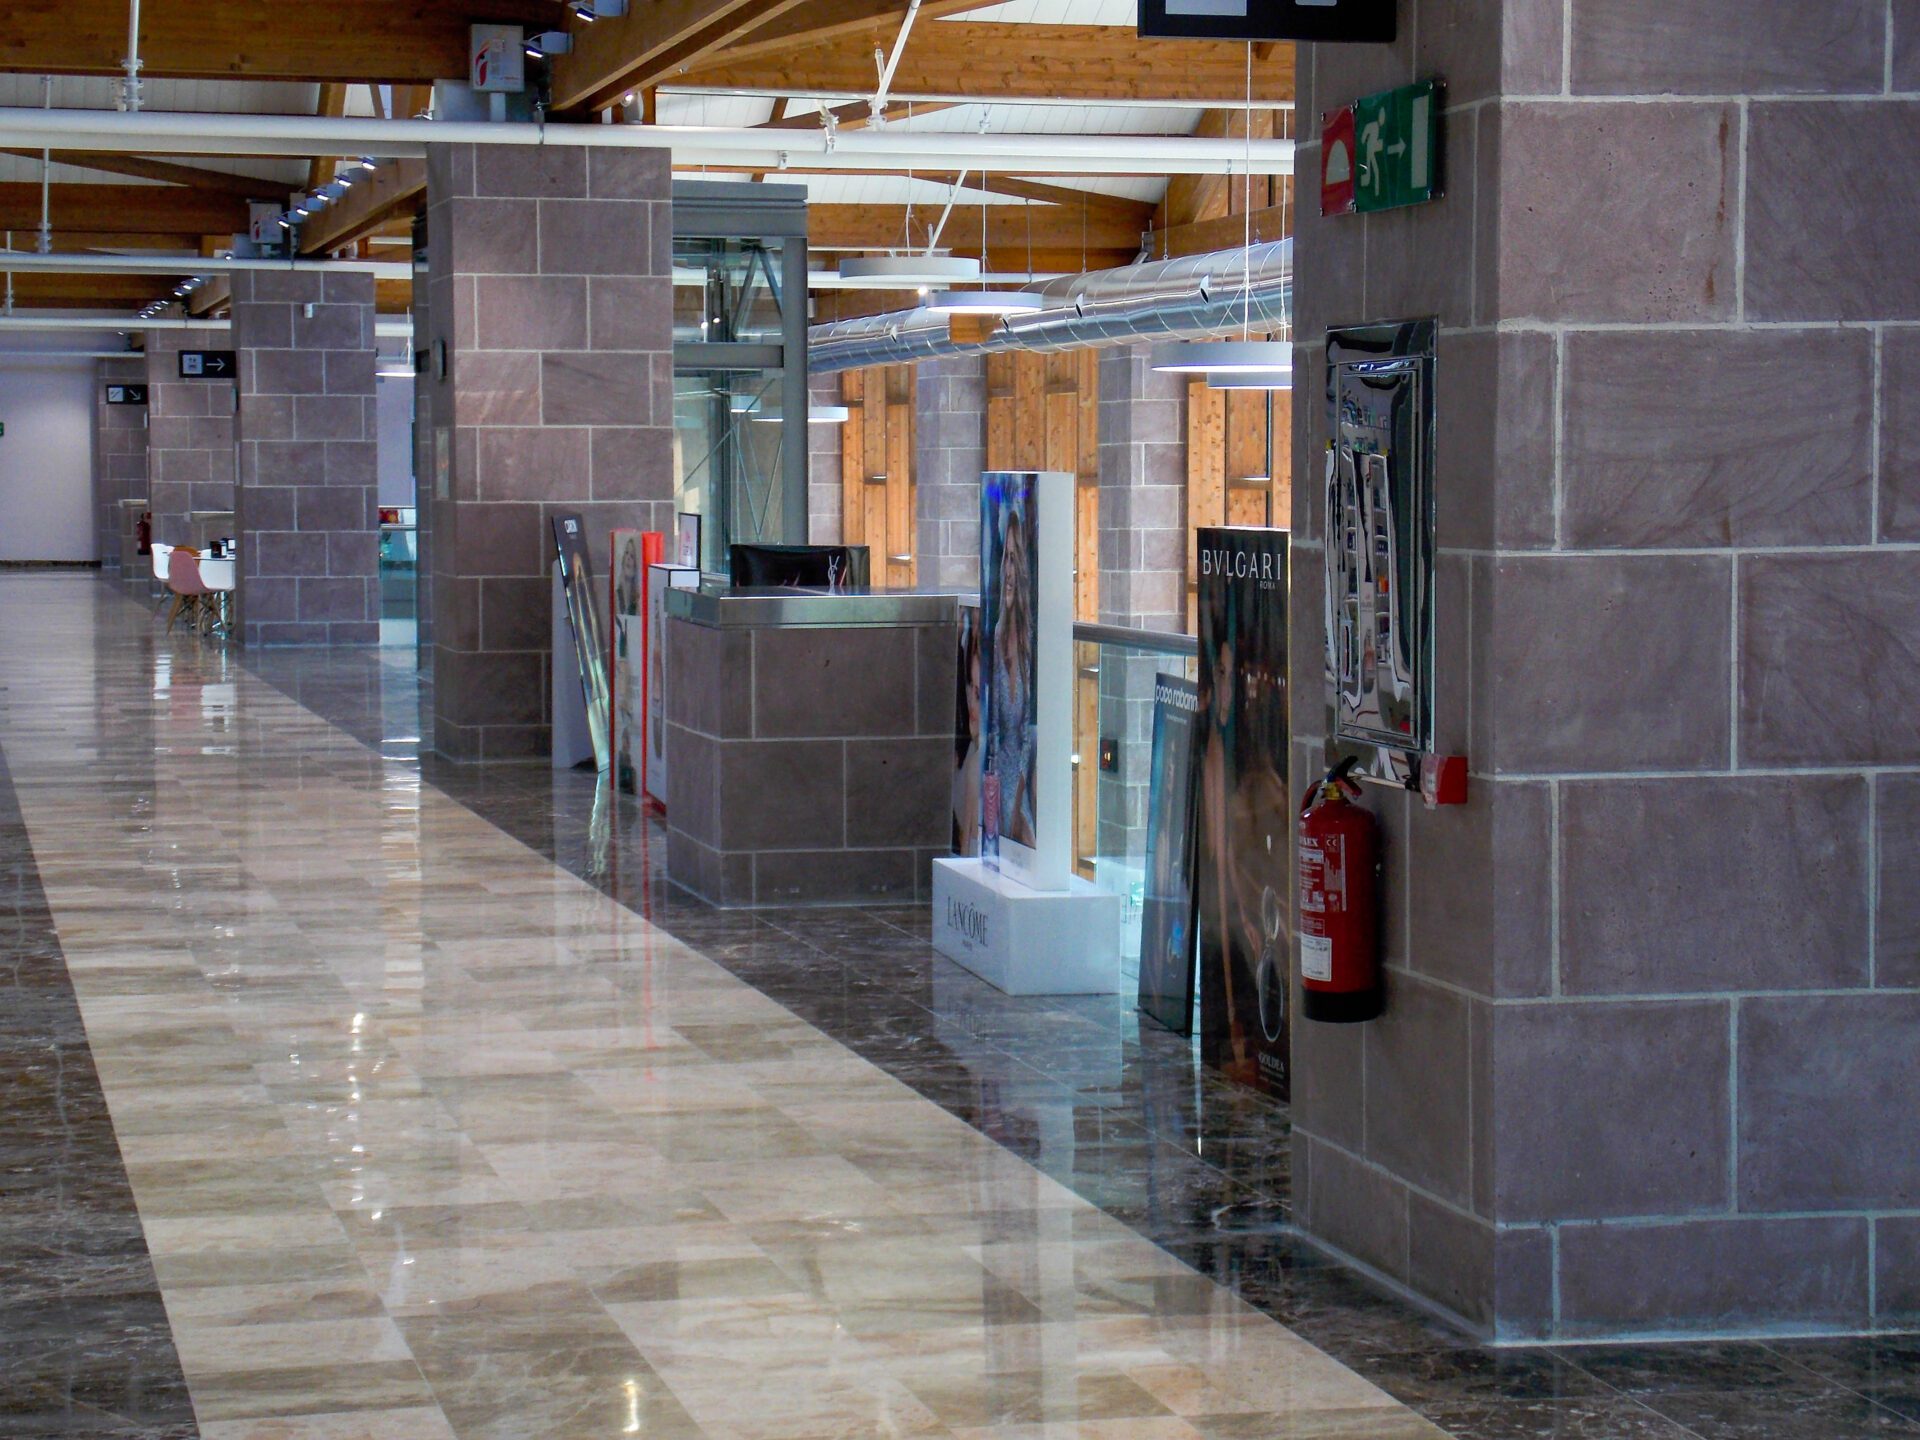 Red burgundy sandstone shopping center interior